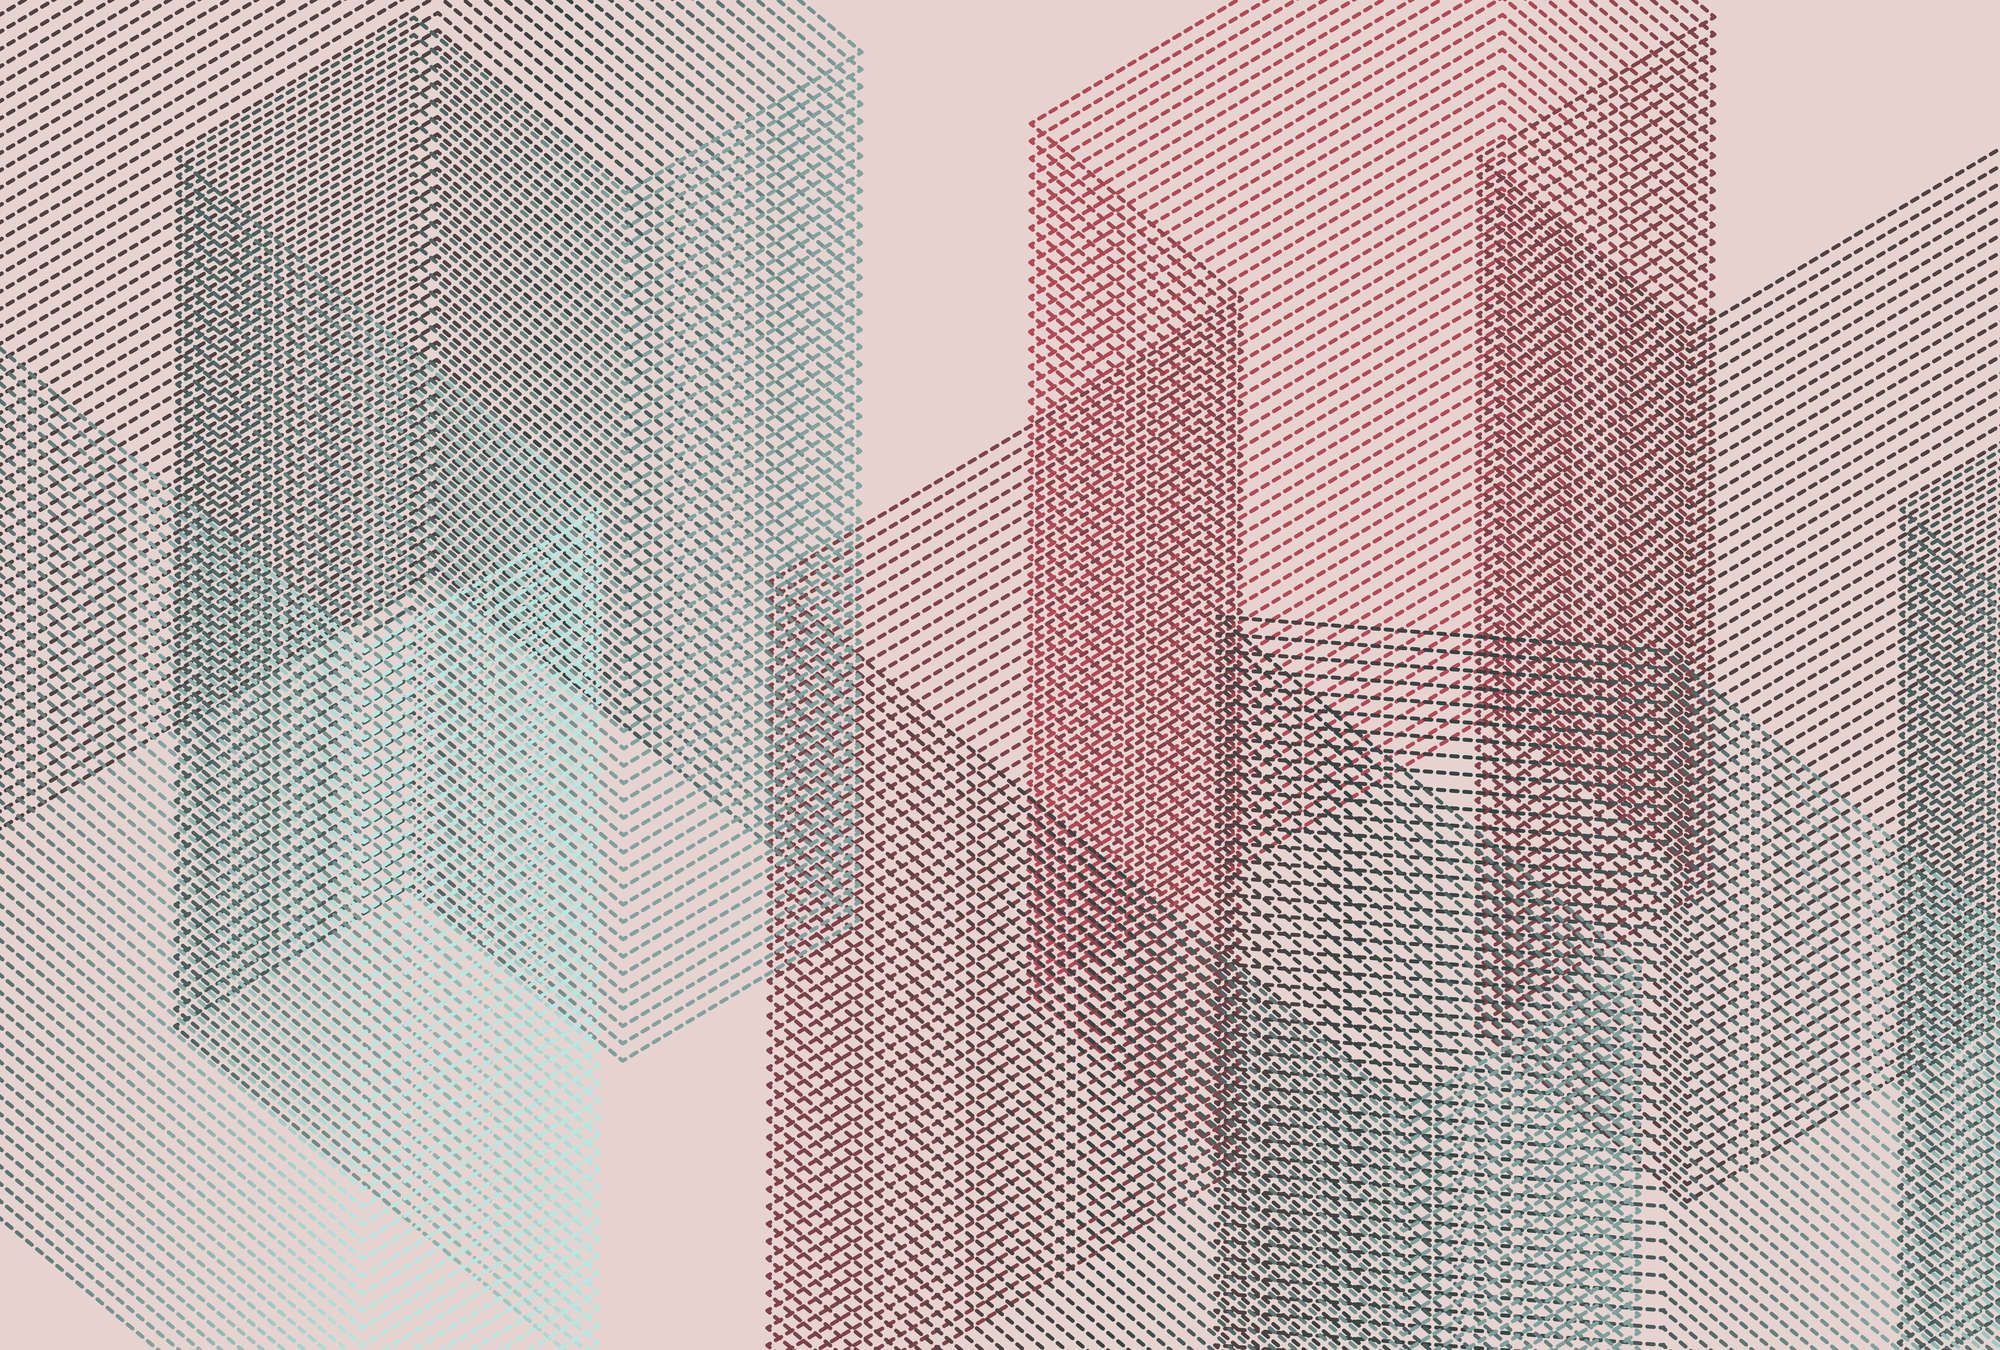             Fototapete »mesh 1« - Abstraktes 3D-Design – Rot, Blau | Leicht strukturiertes Vlies
        